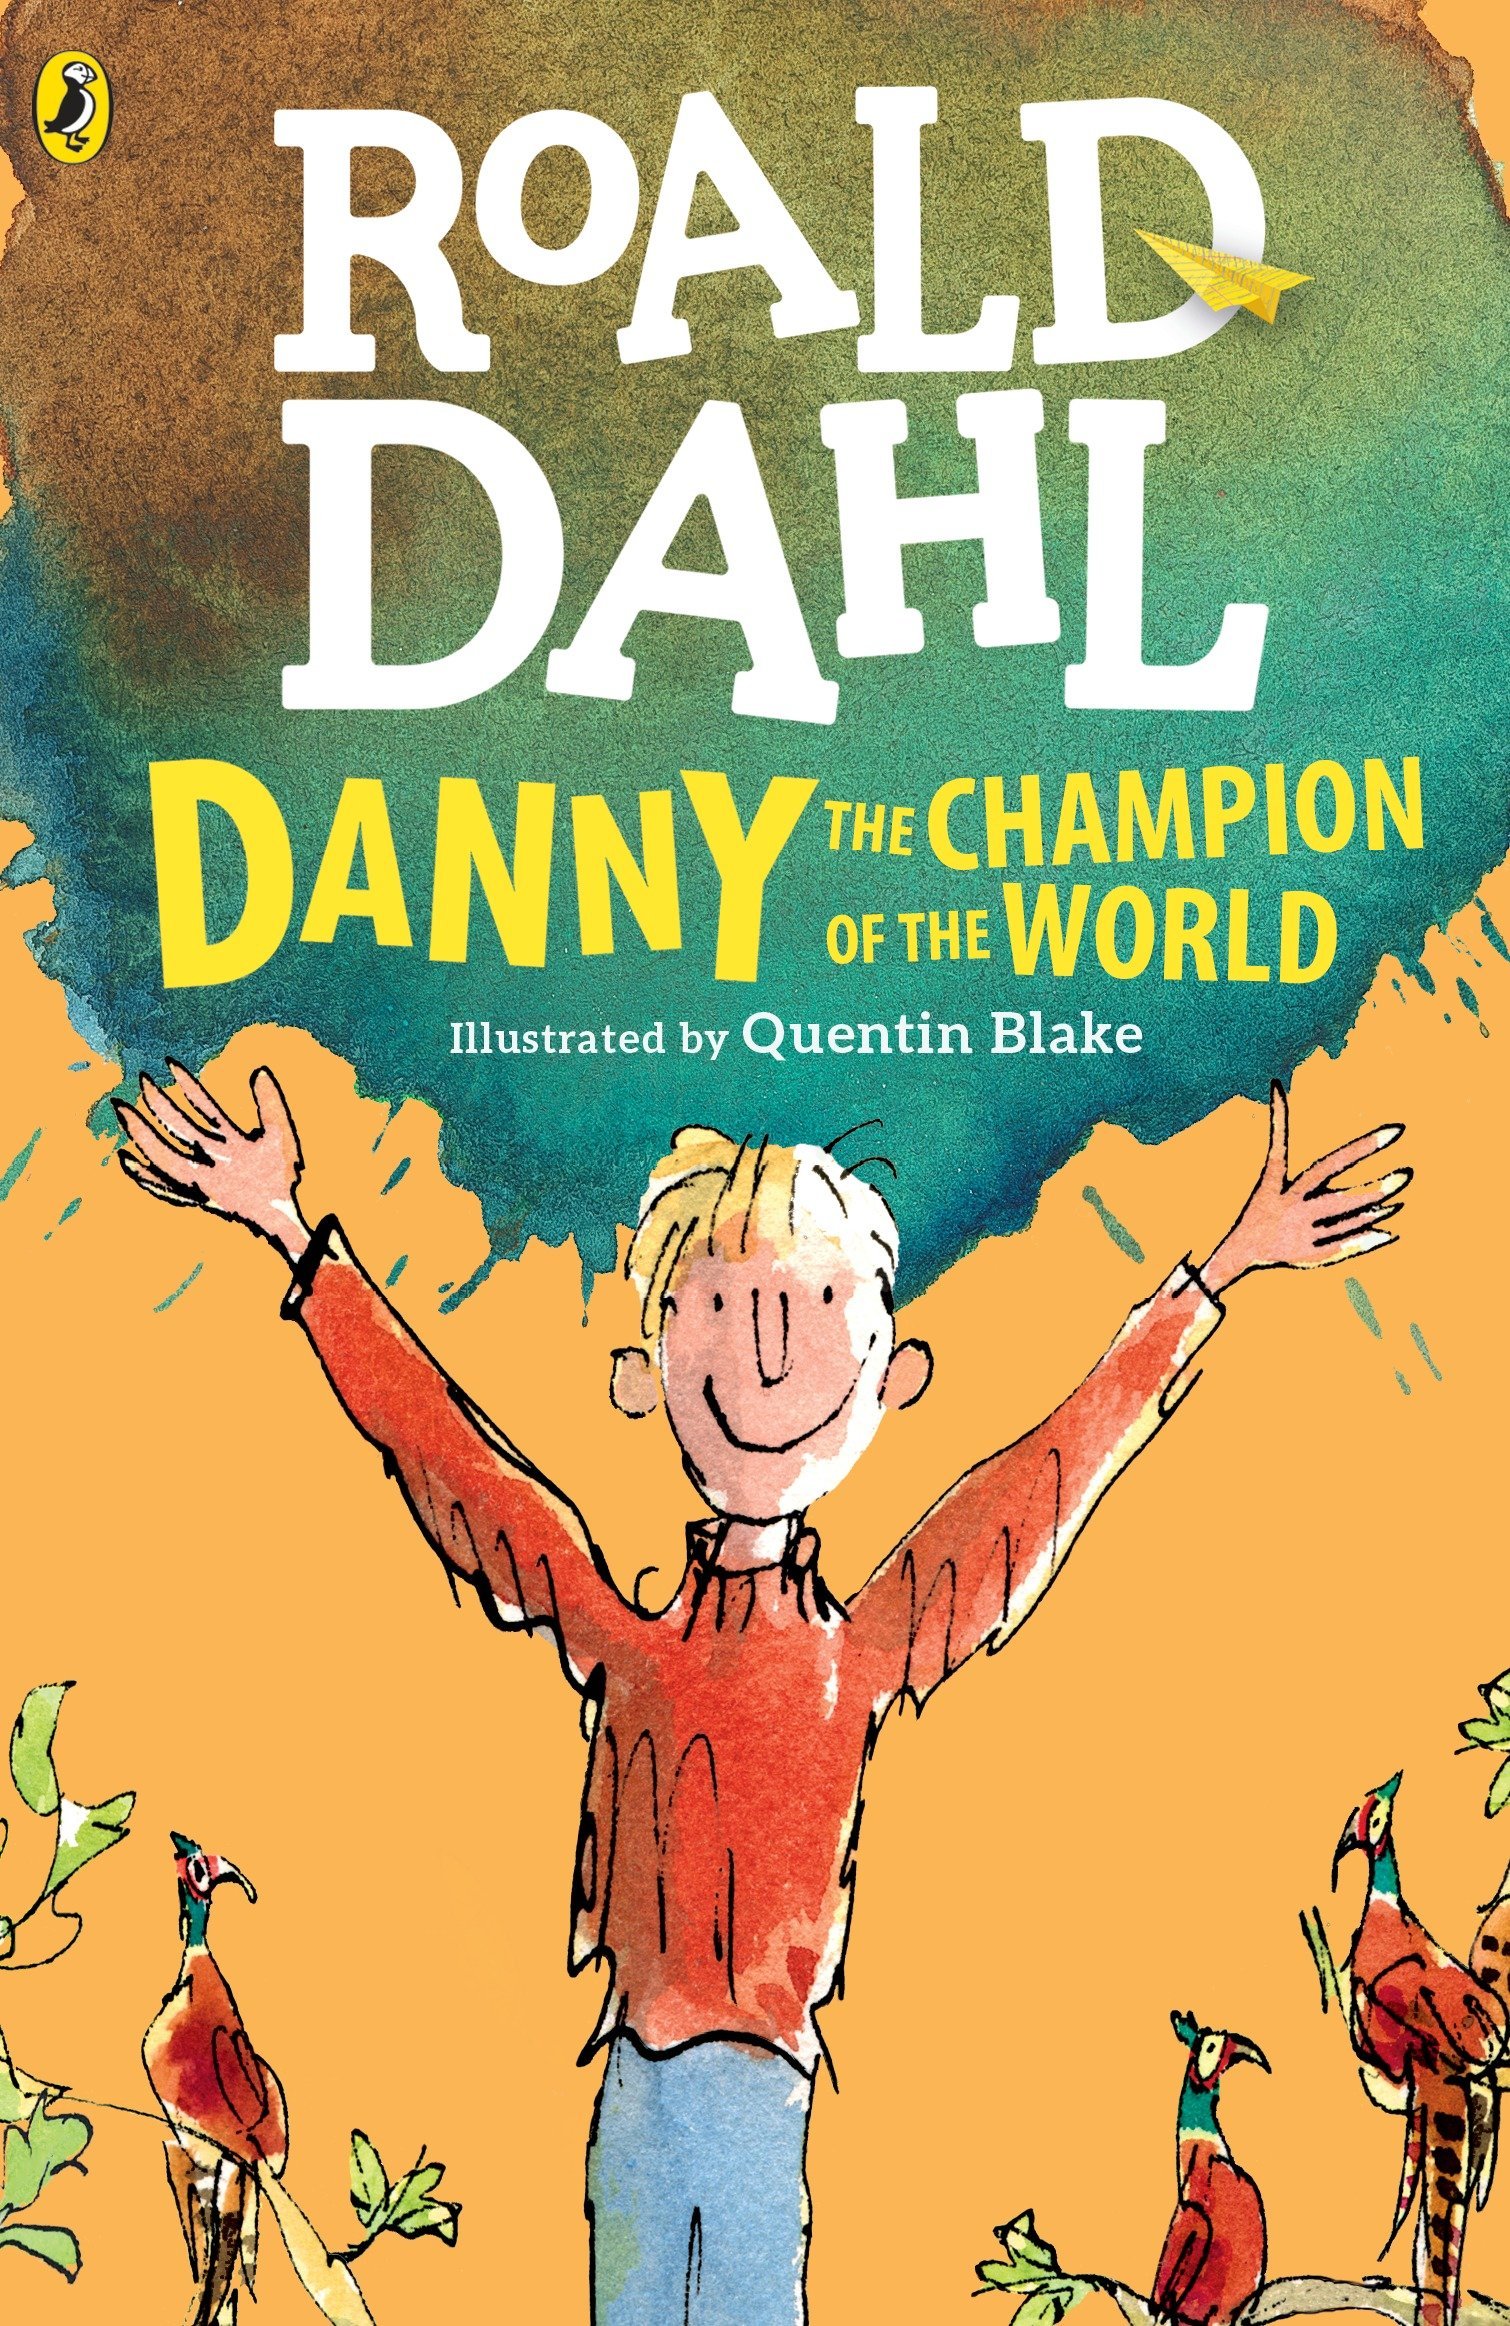 Roald Dahl – Danny The Champion Of The World